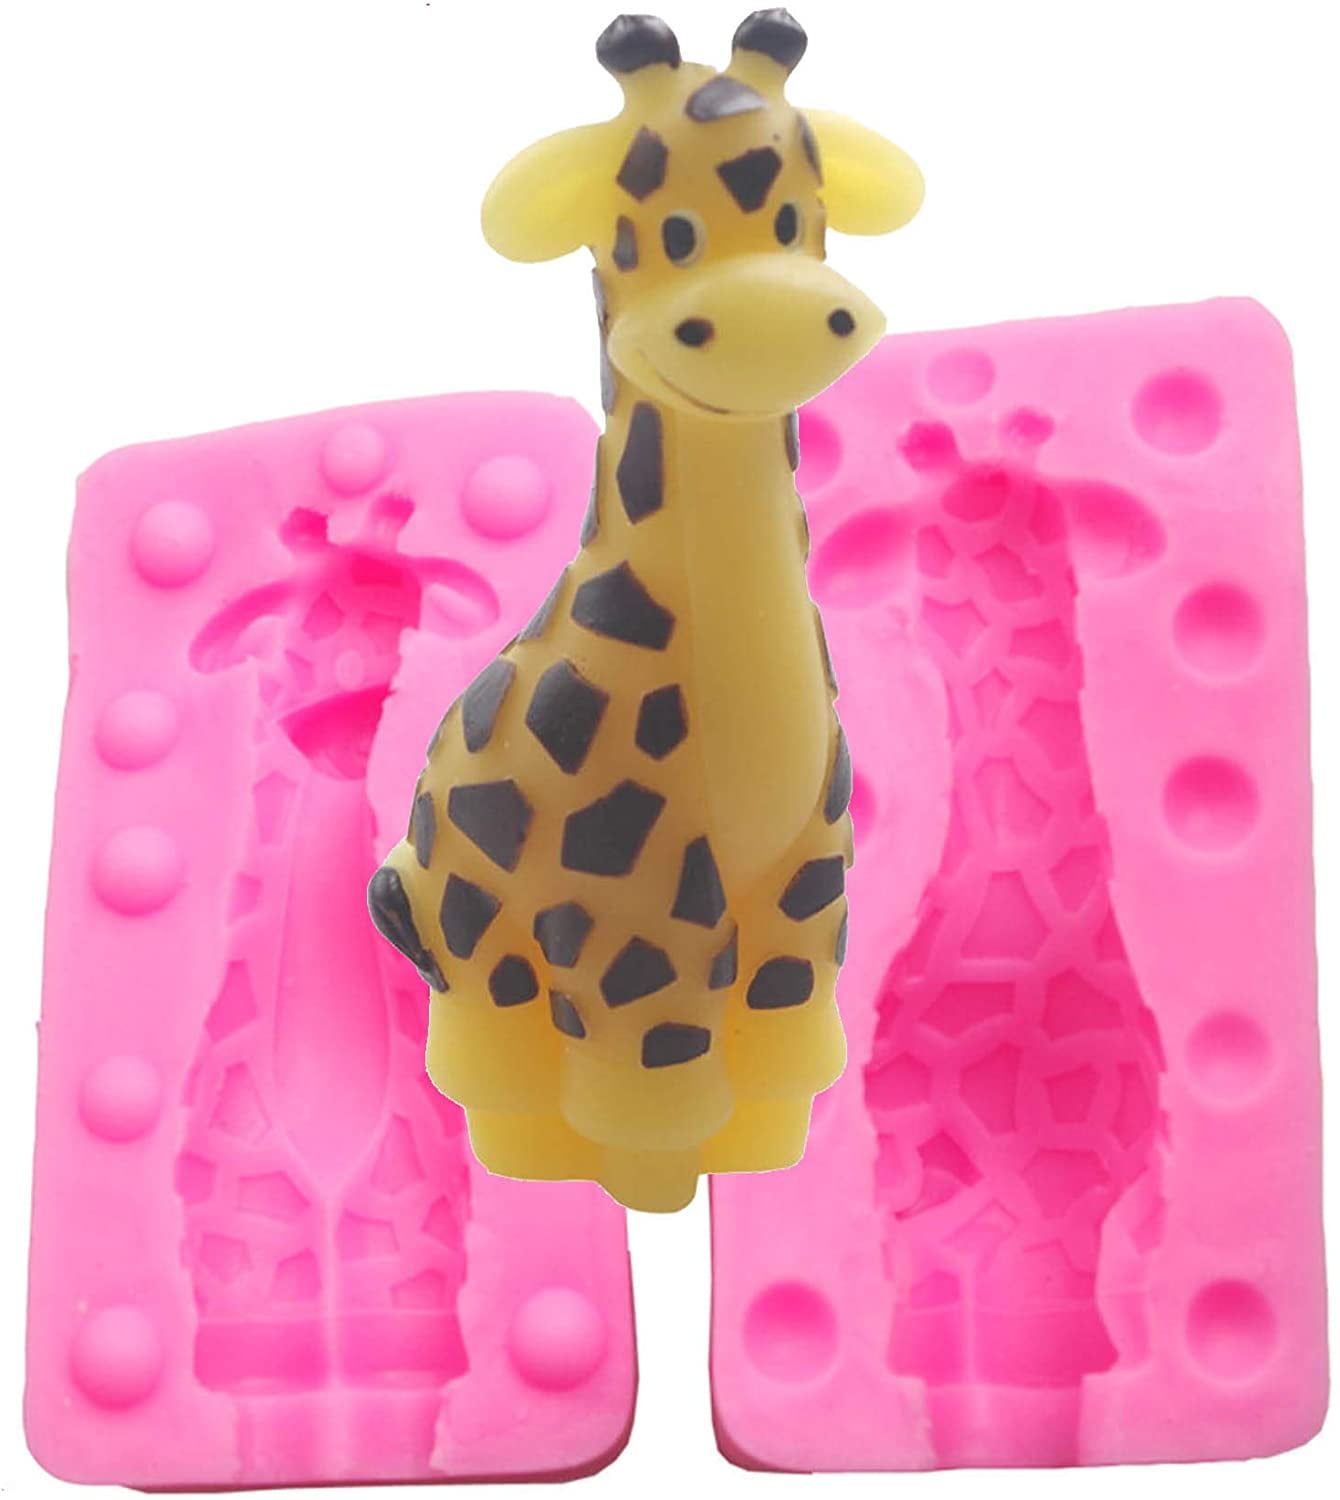 Animal Skin Chocolate Bar Silicone Mould 4 cell Giraffe Print